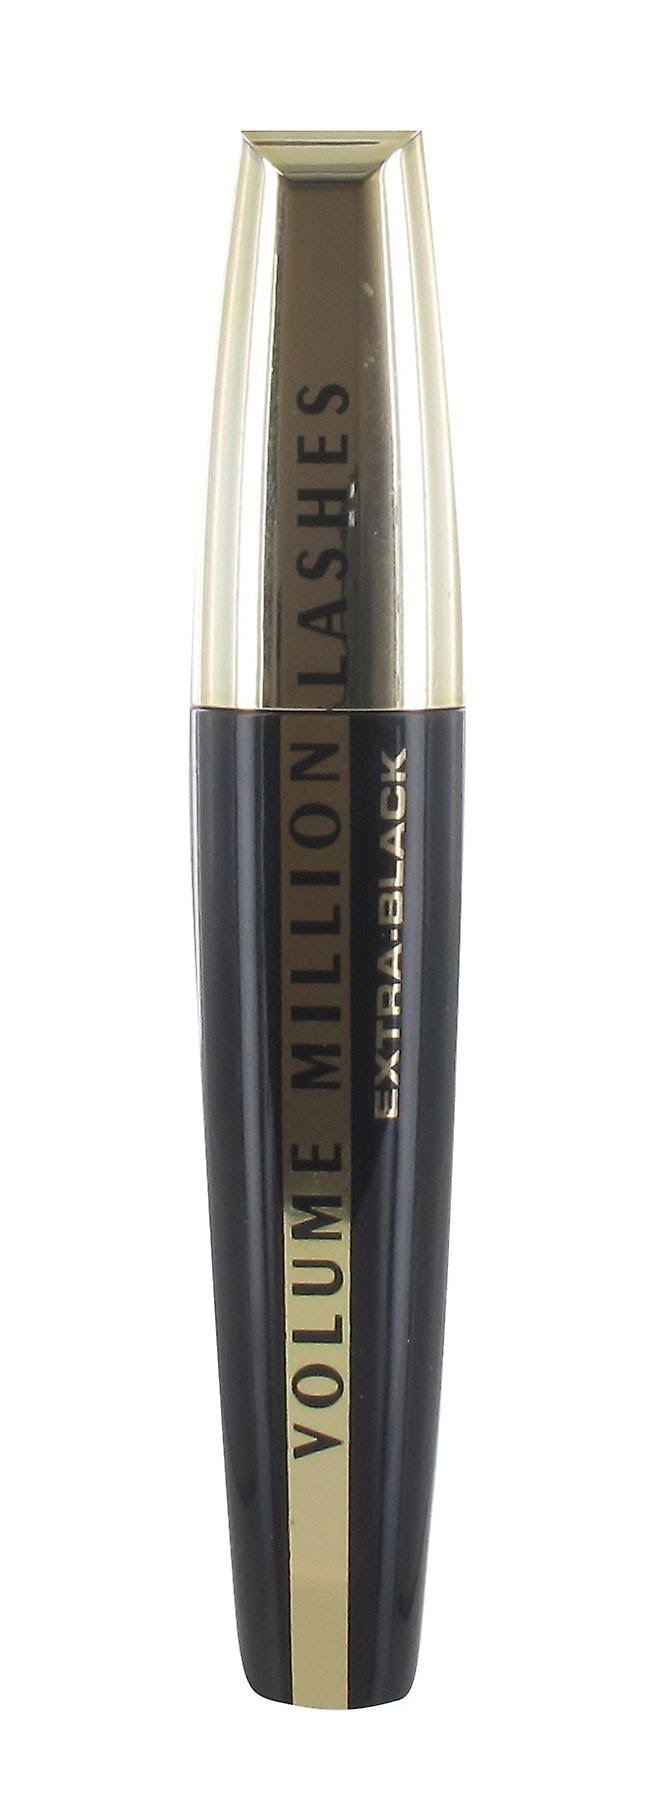 L'Oreal Paris Volume Million Lashes Mascara - Extra Black